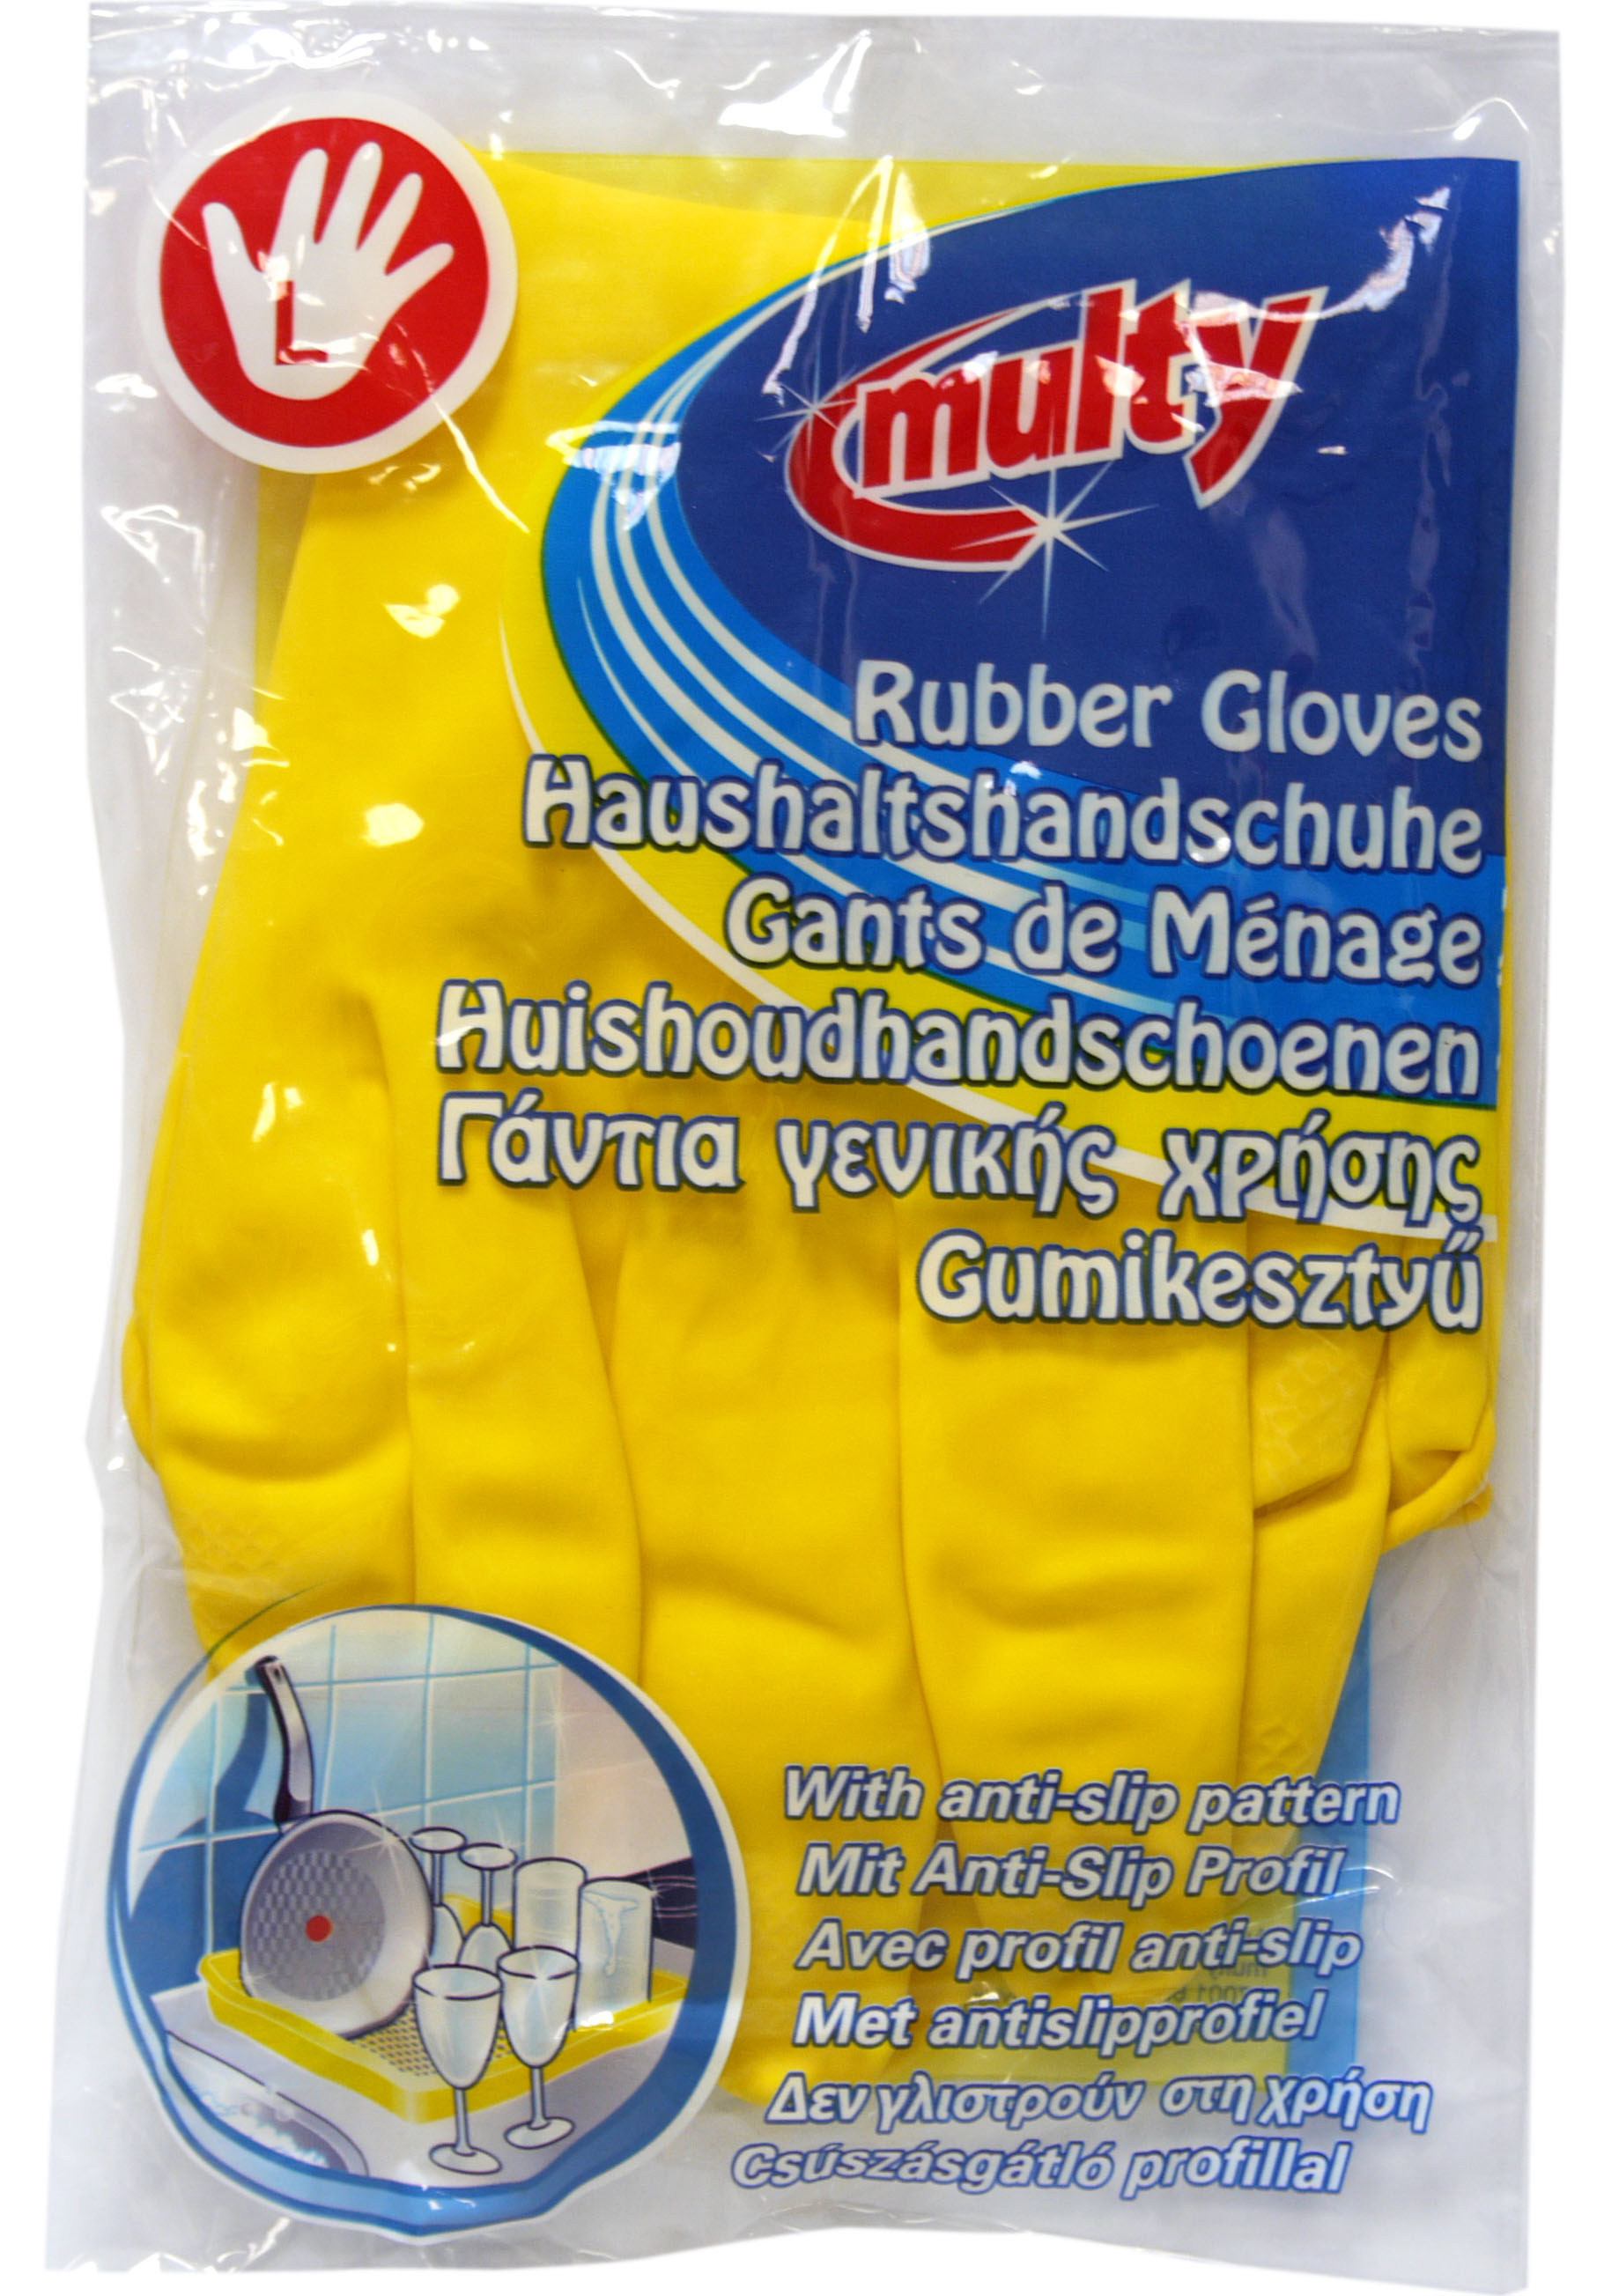 01703 - household gloves, large